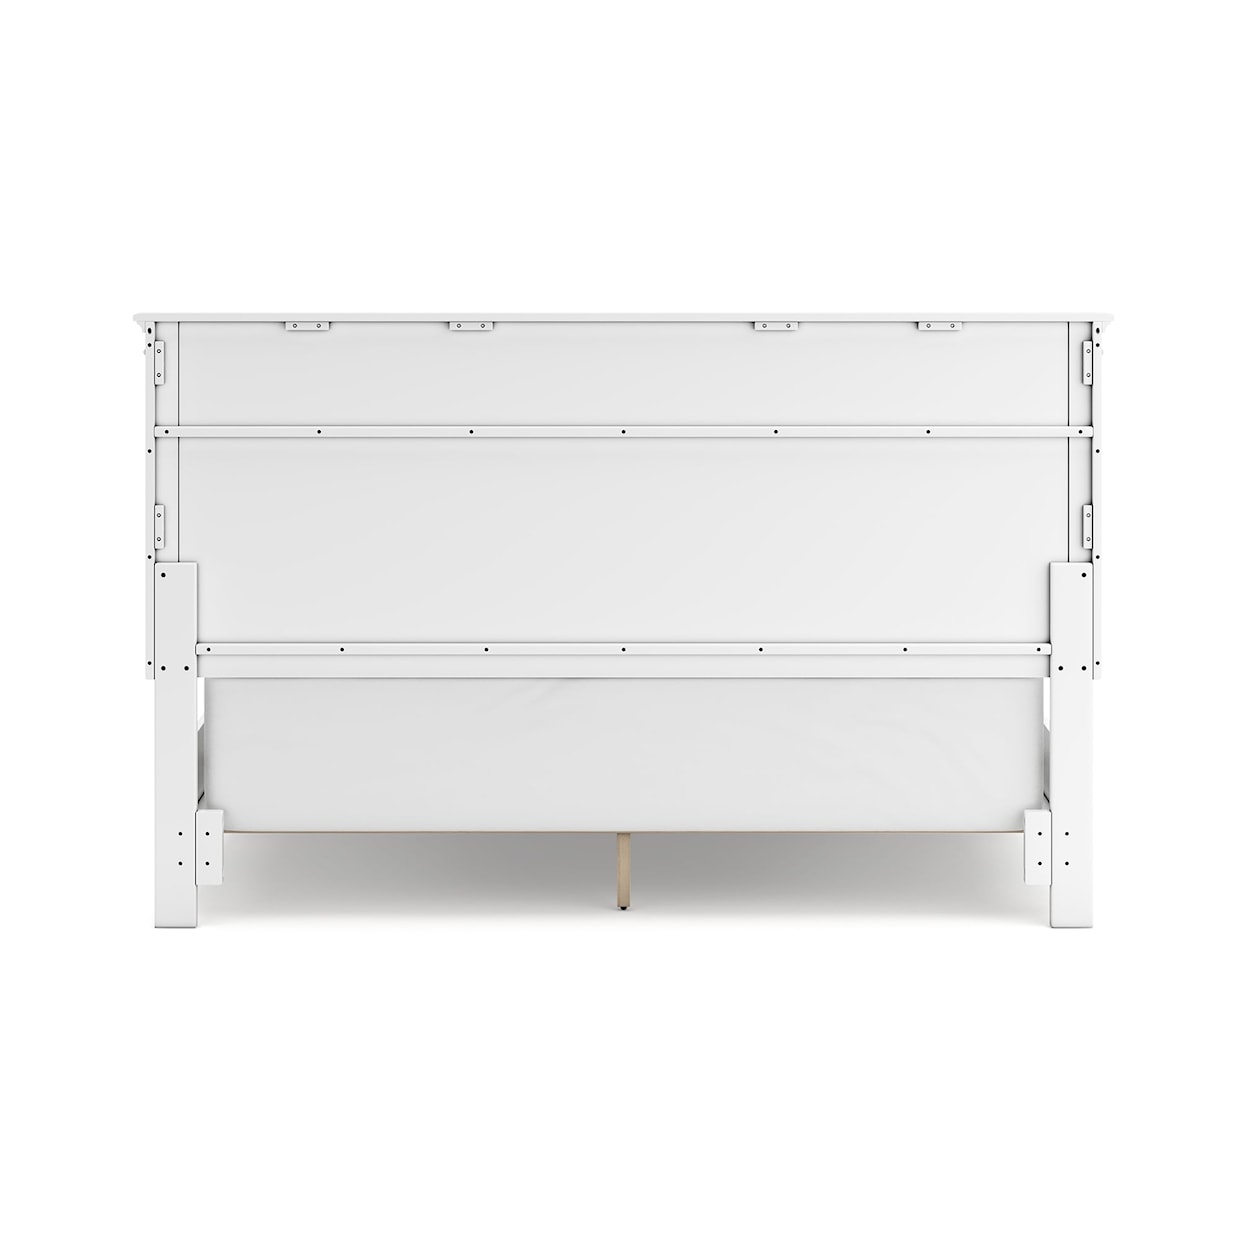 Signature Design Fortman California King Panel Bed